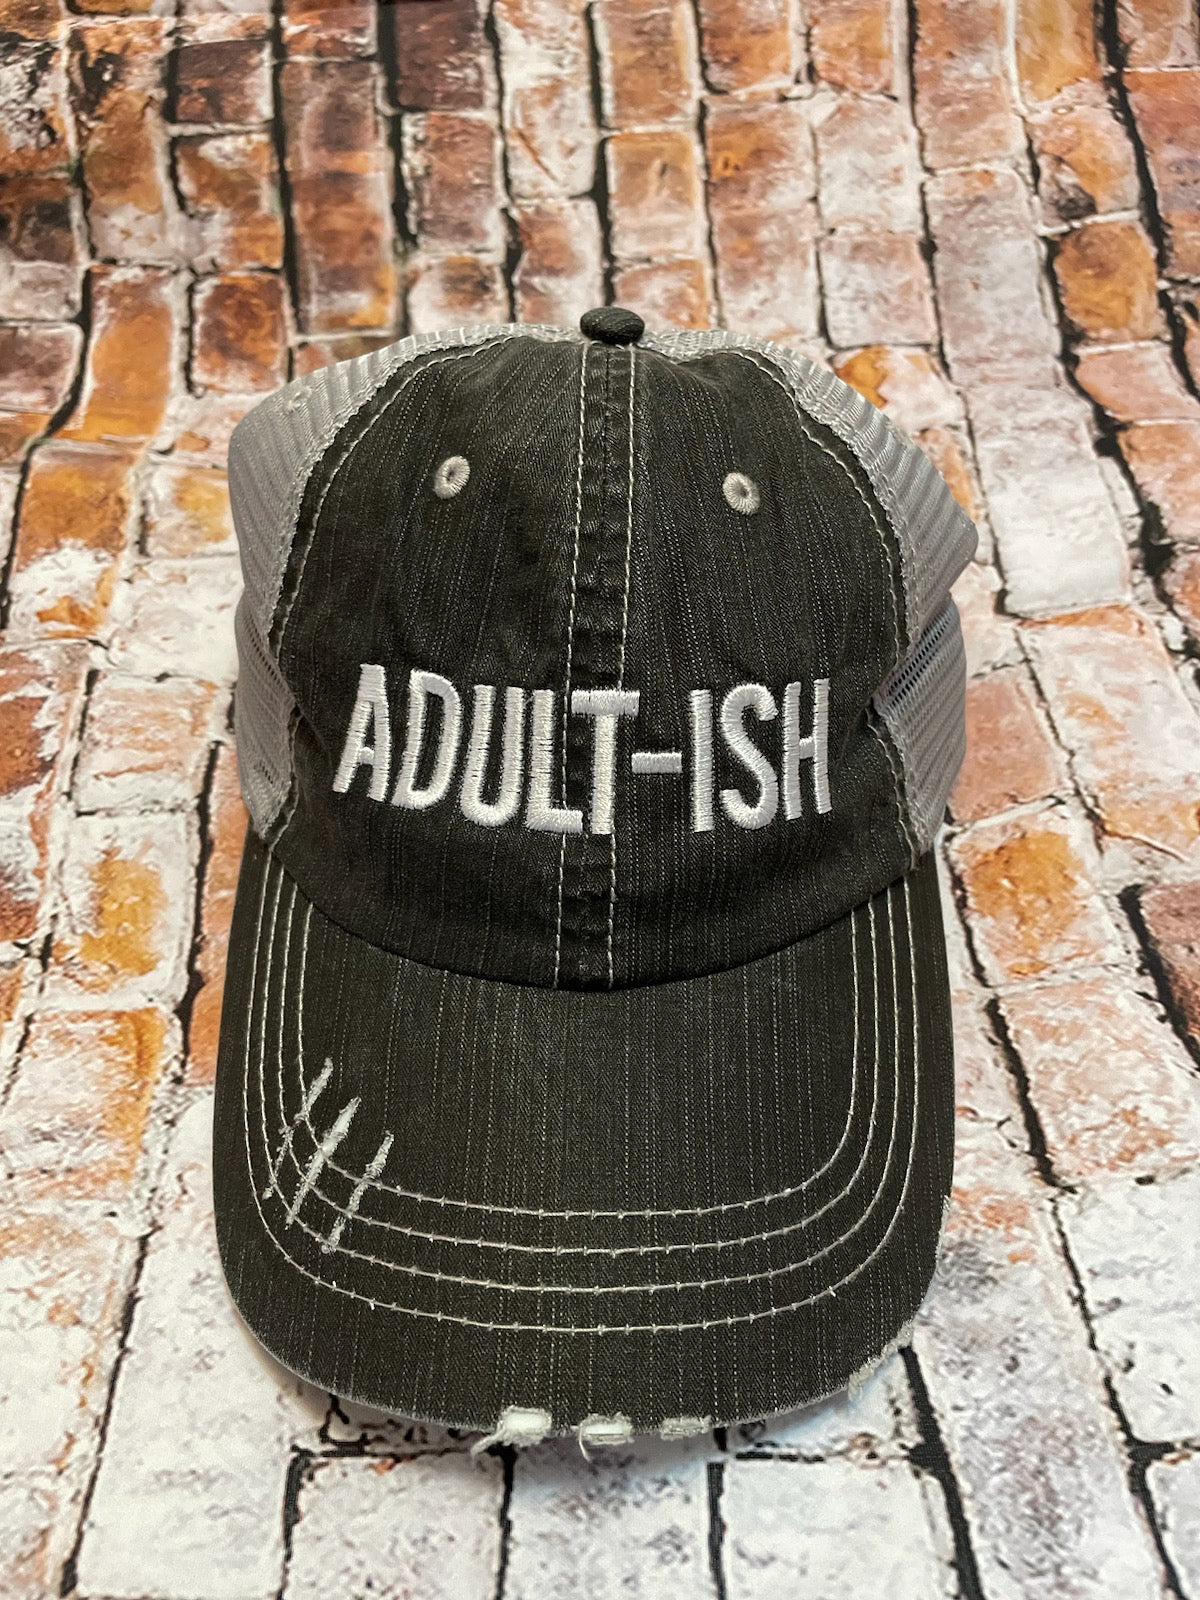 Adult-ish Baseball Hat